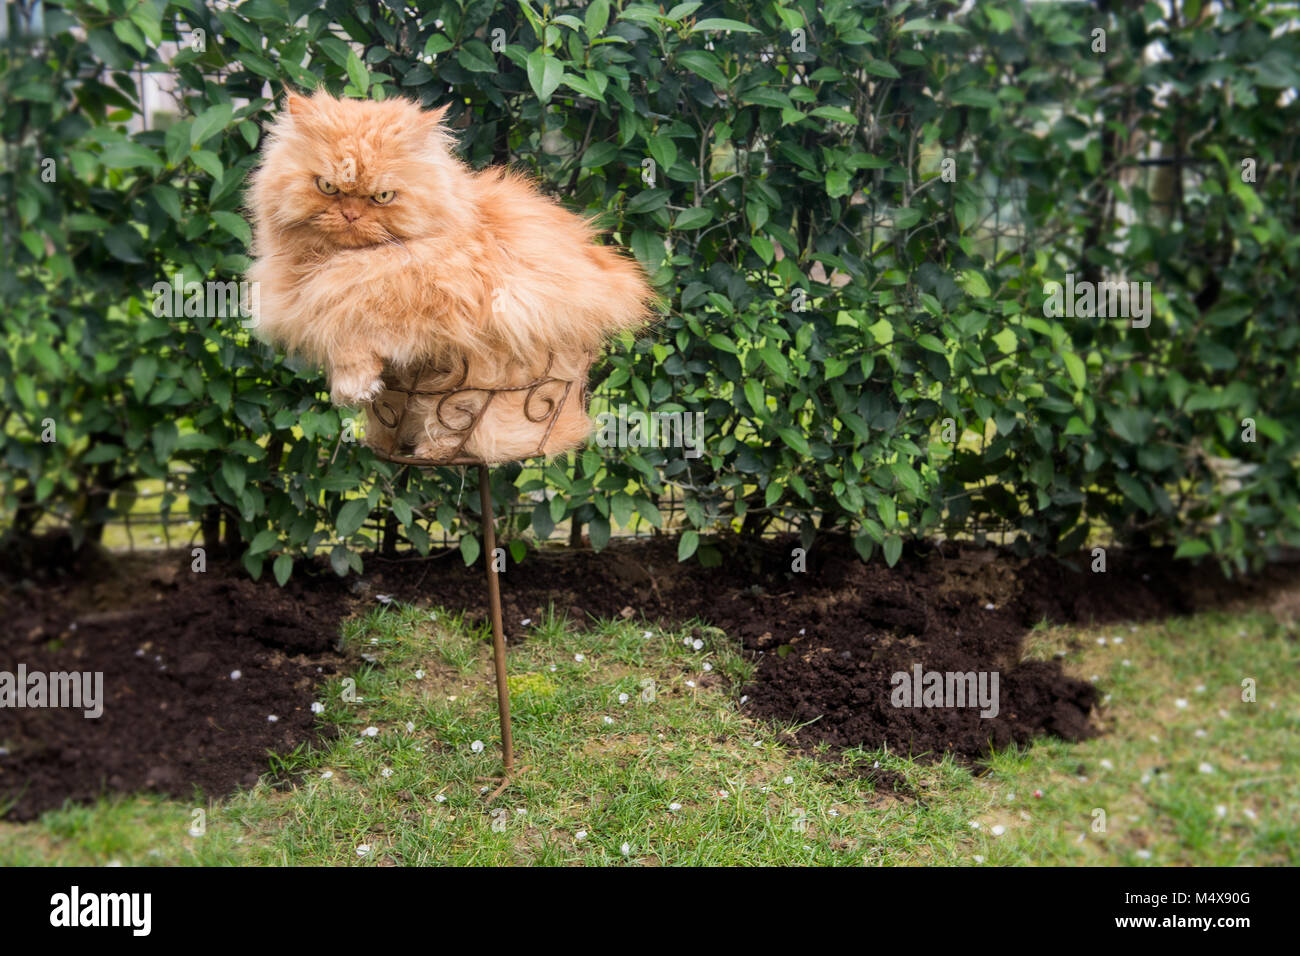 Orange Persian cat sitting in flower pot Stock Photo